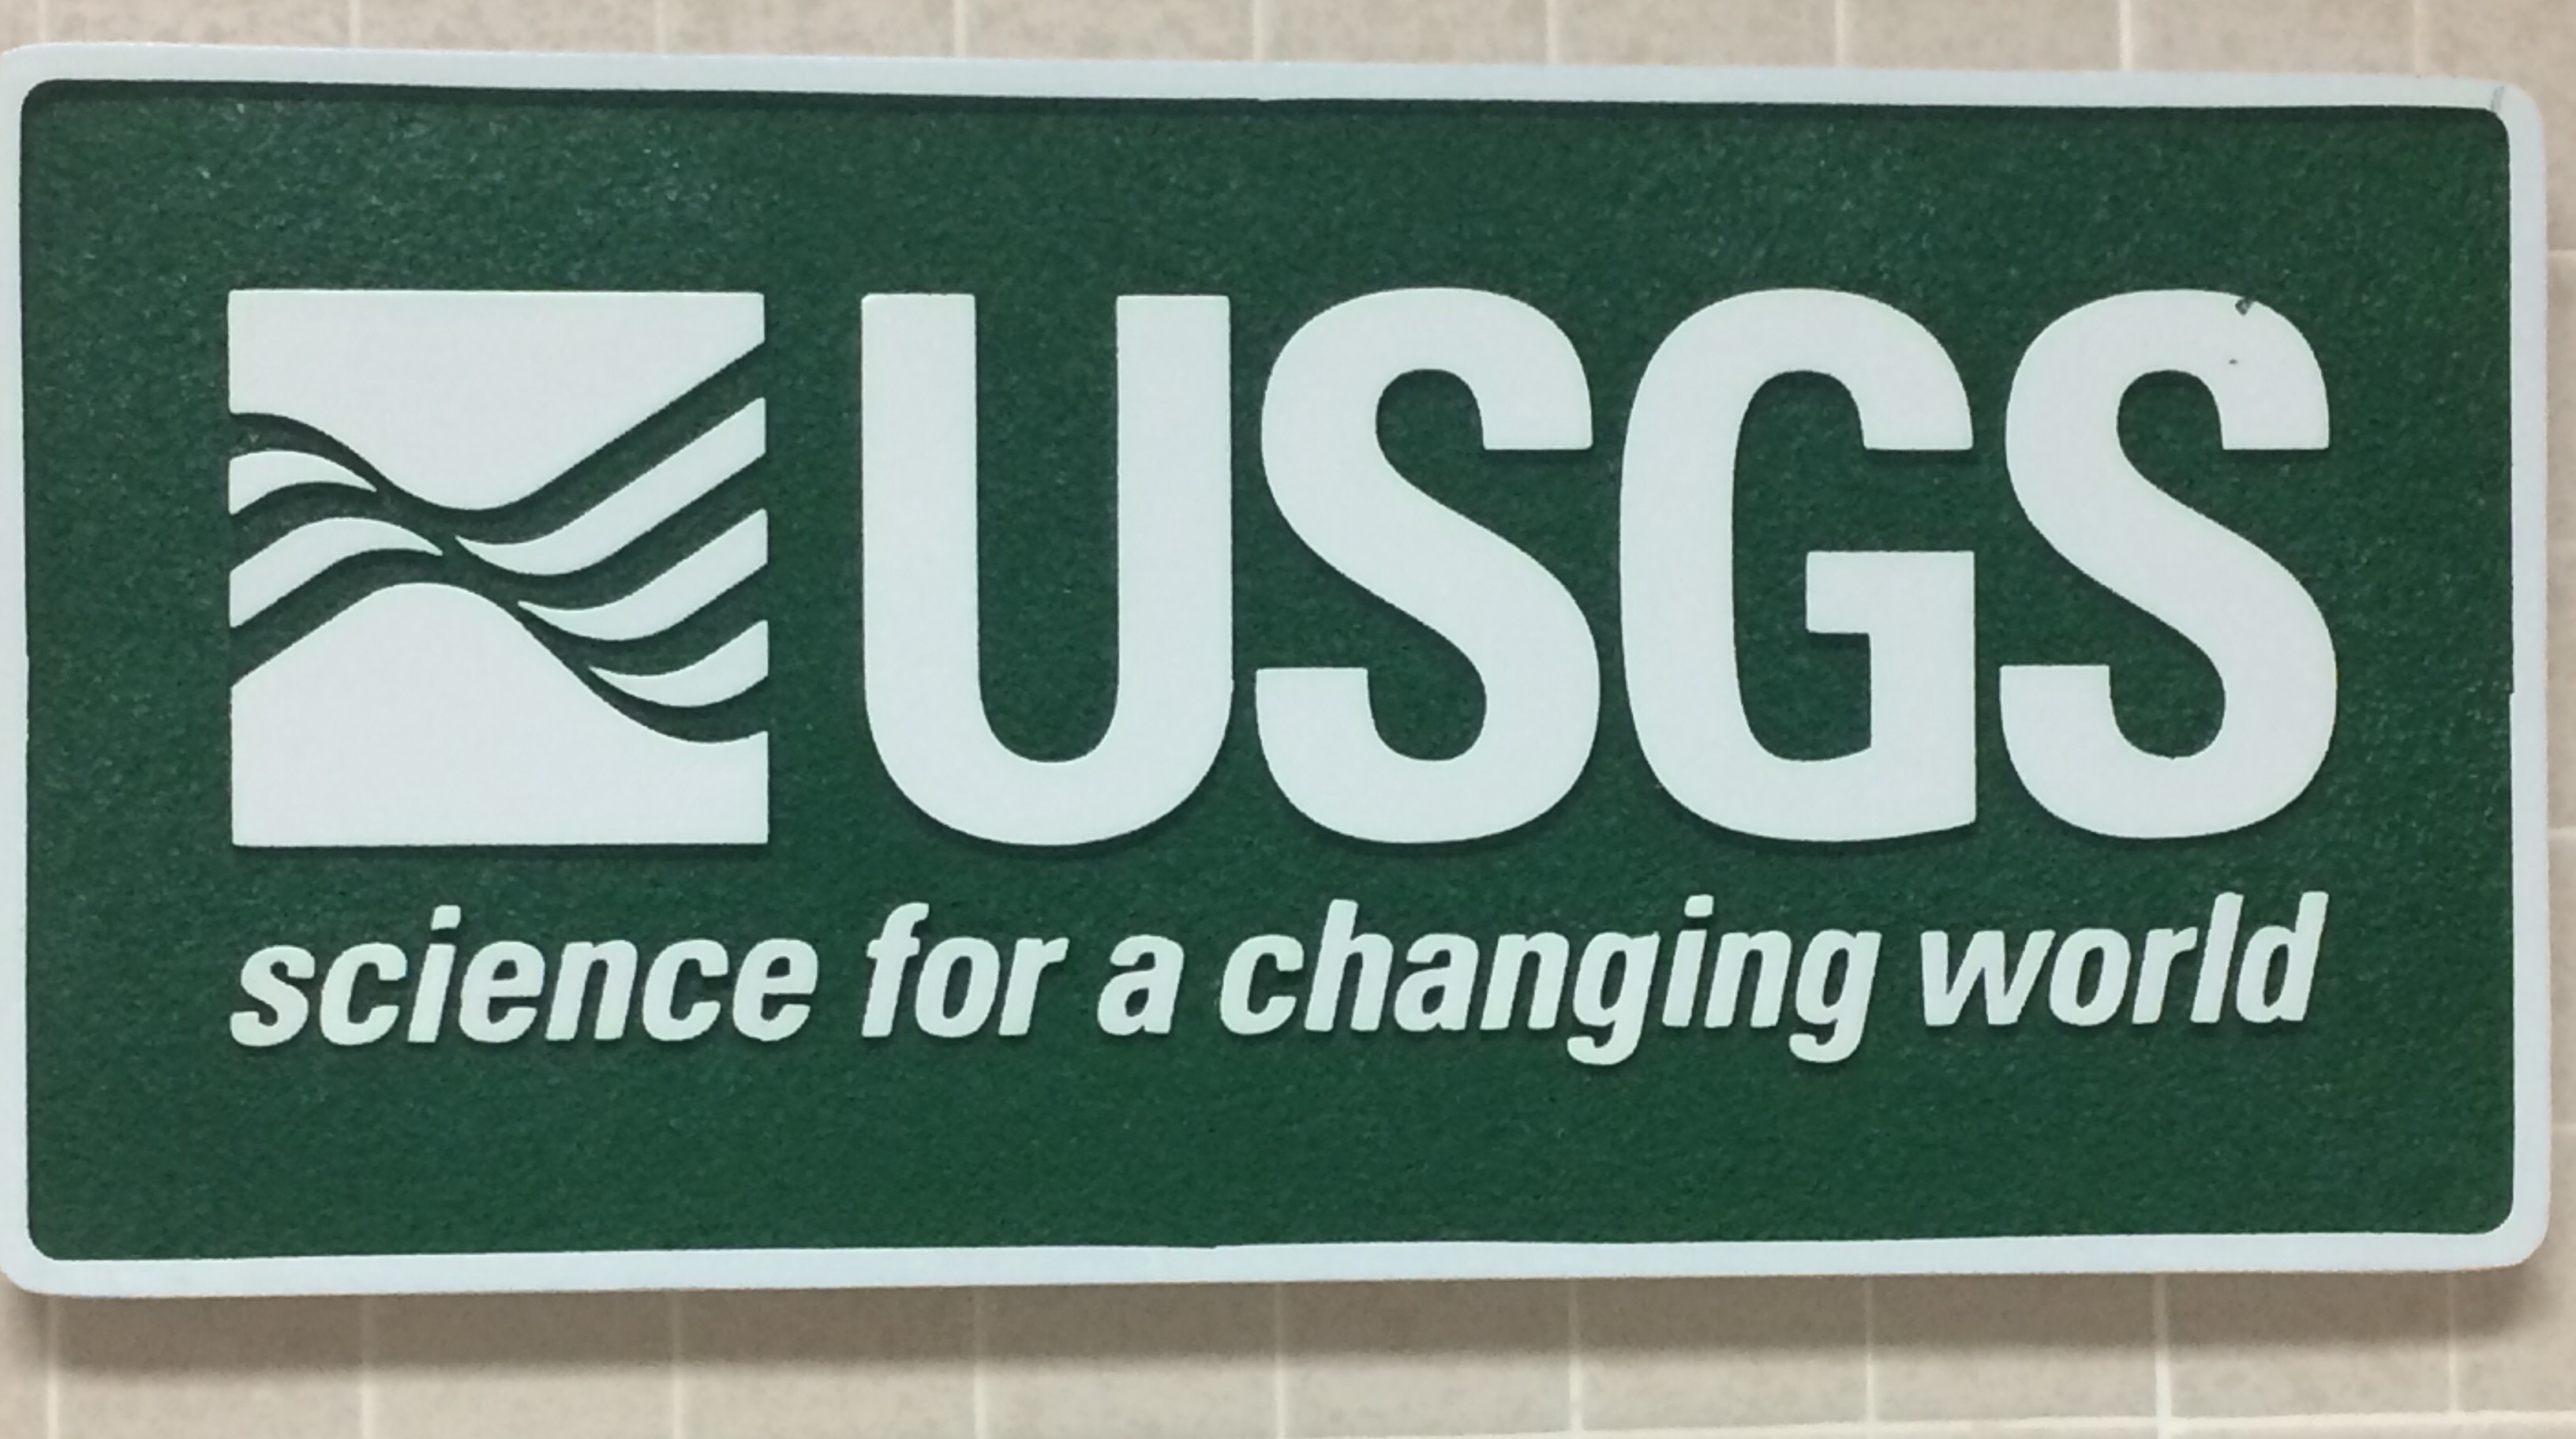 USGS logo